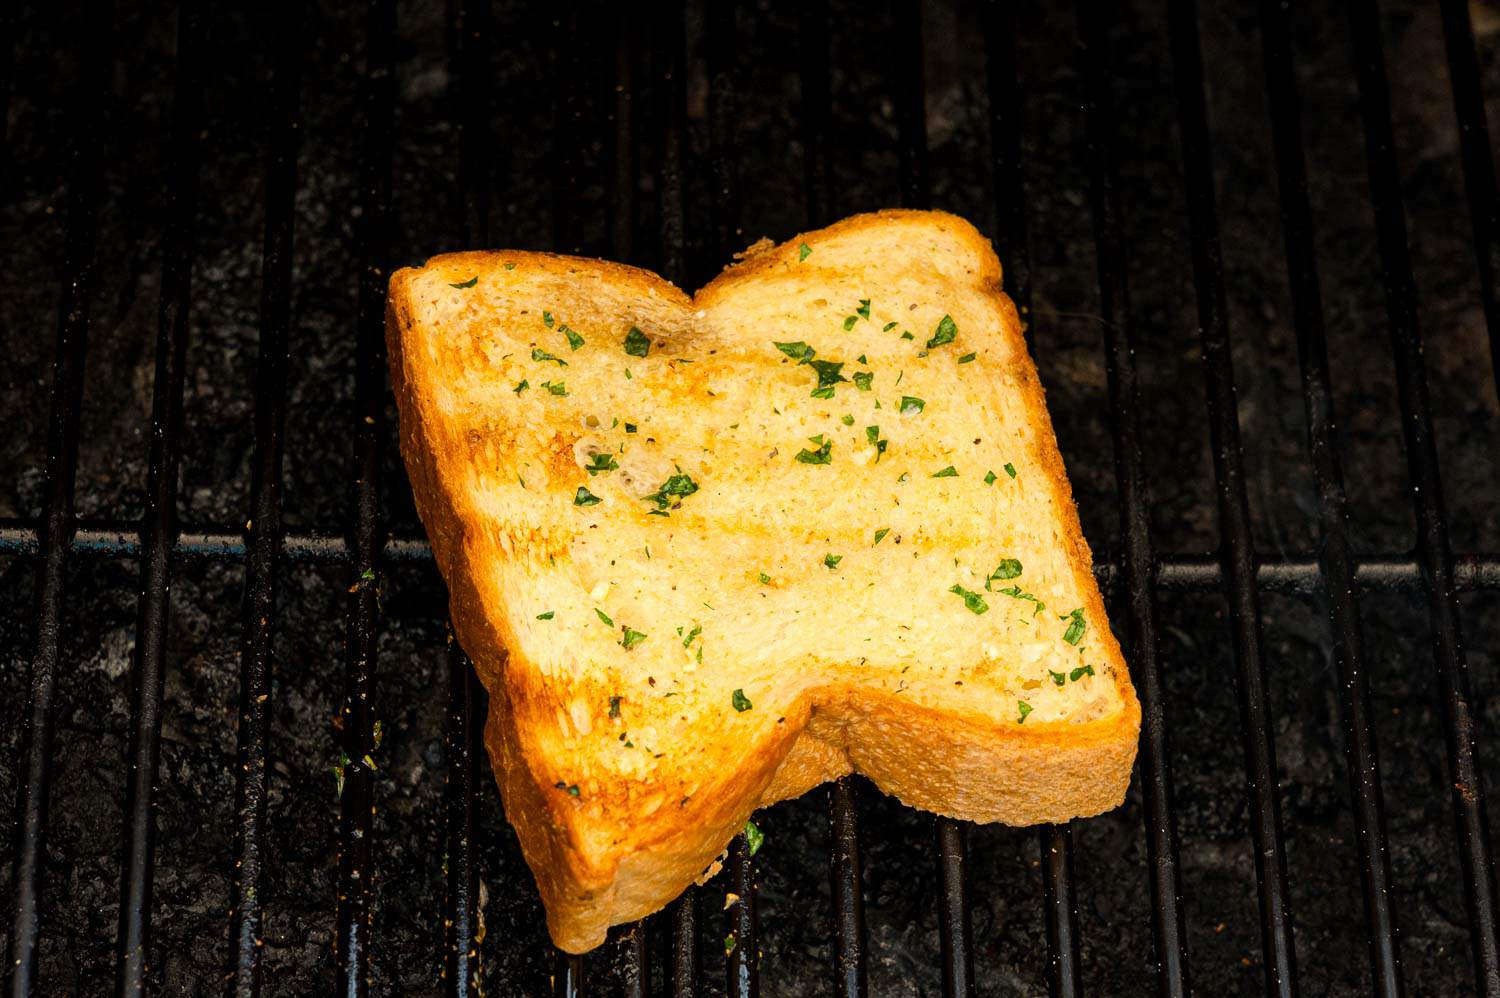 A slice of Texas toast garlic bread on a grill.